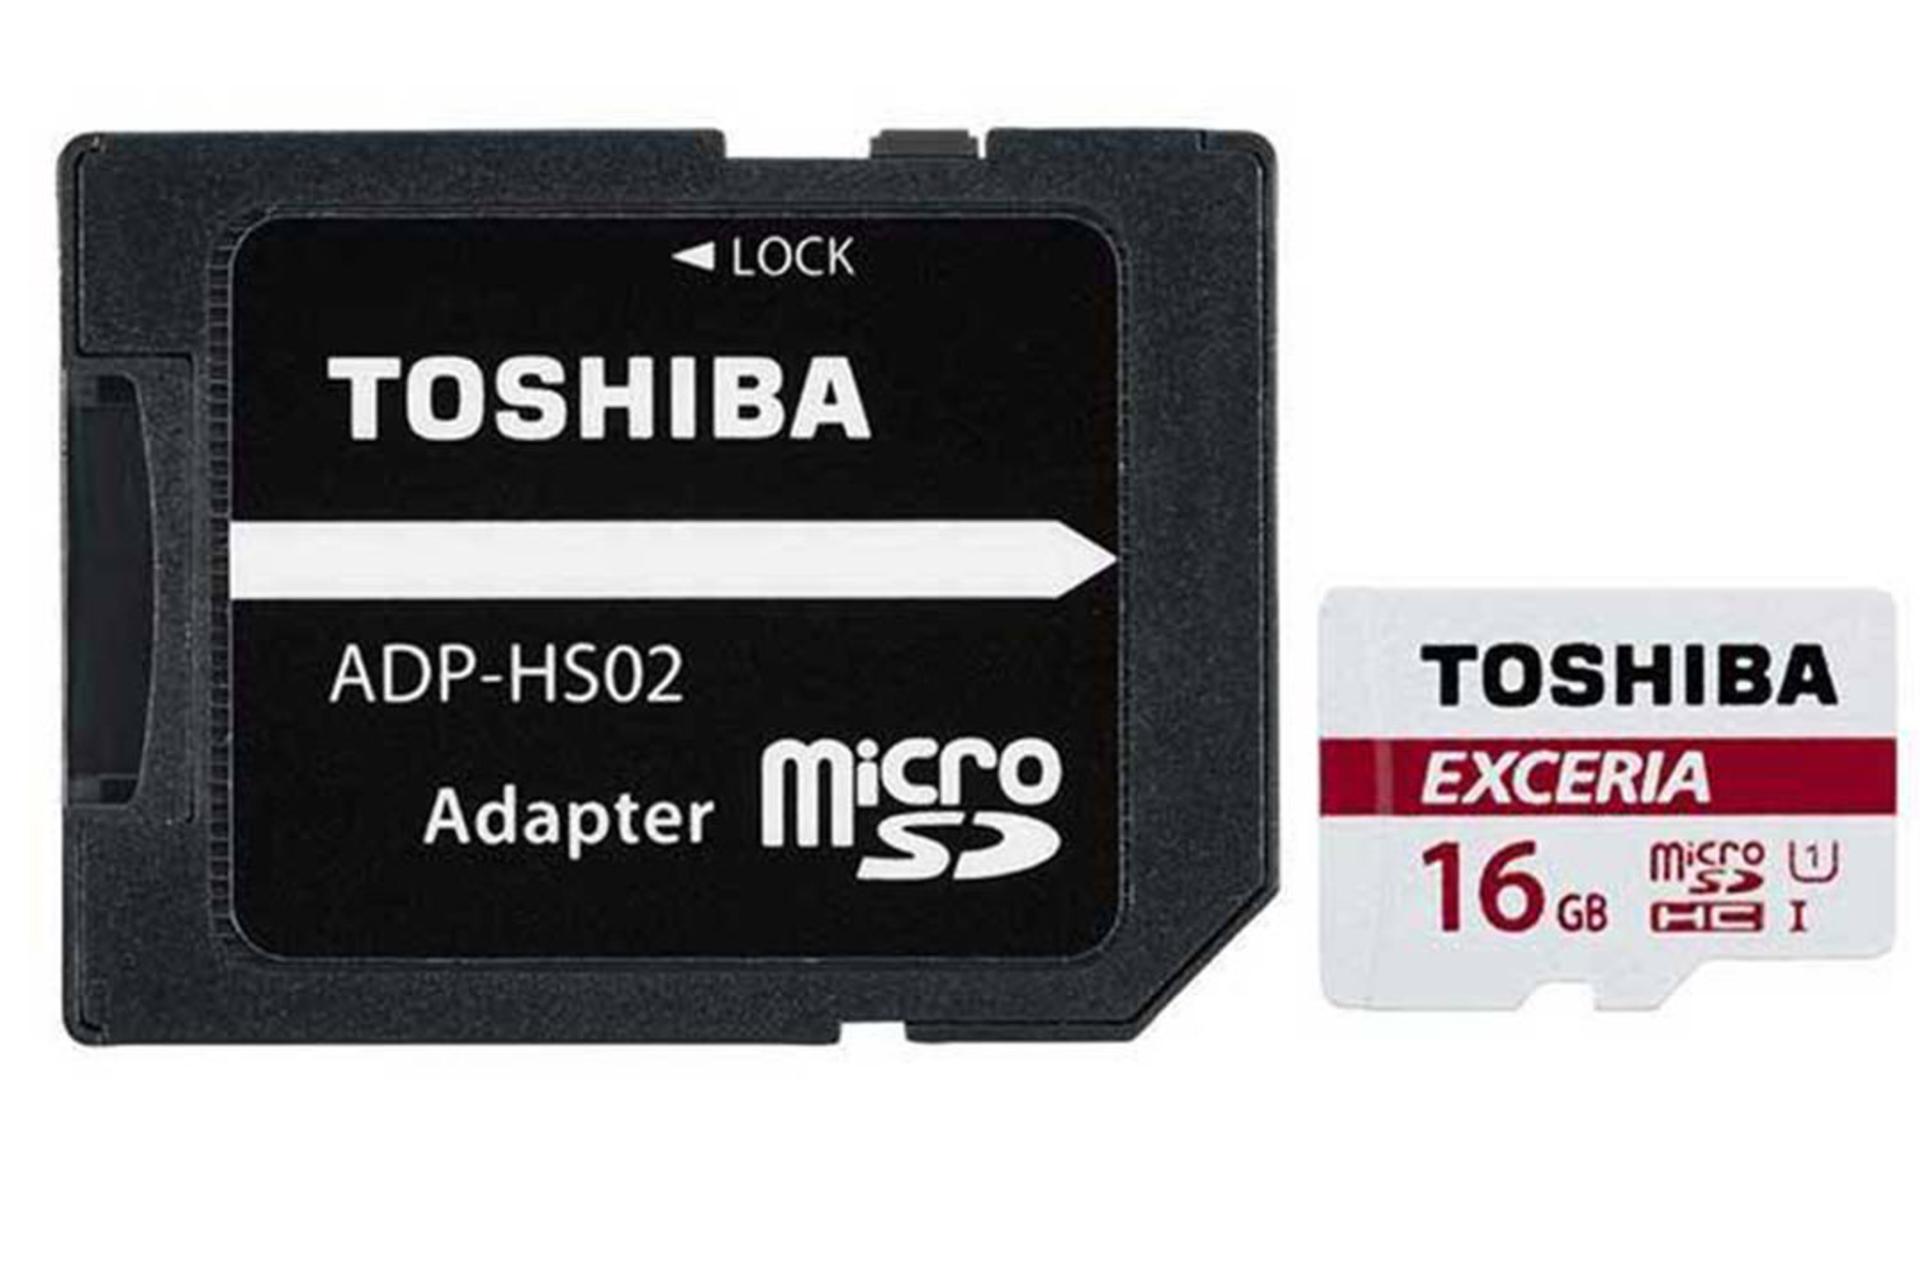 Toshiba Exceria M302 microSDHC Class 10 UHS-I 16GB